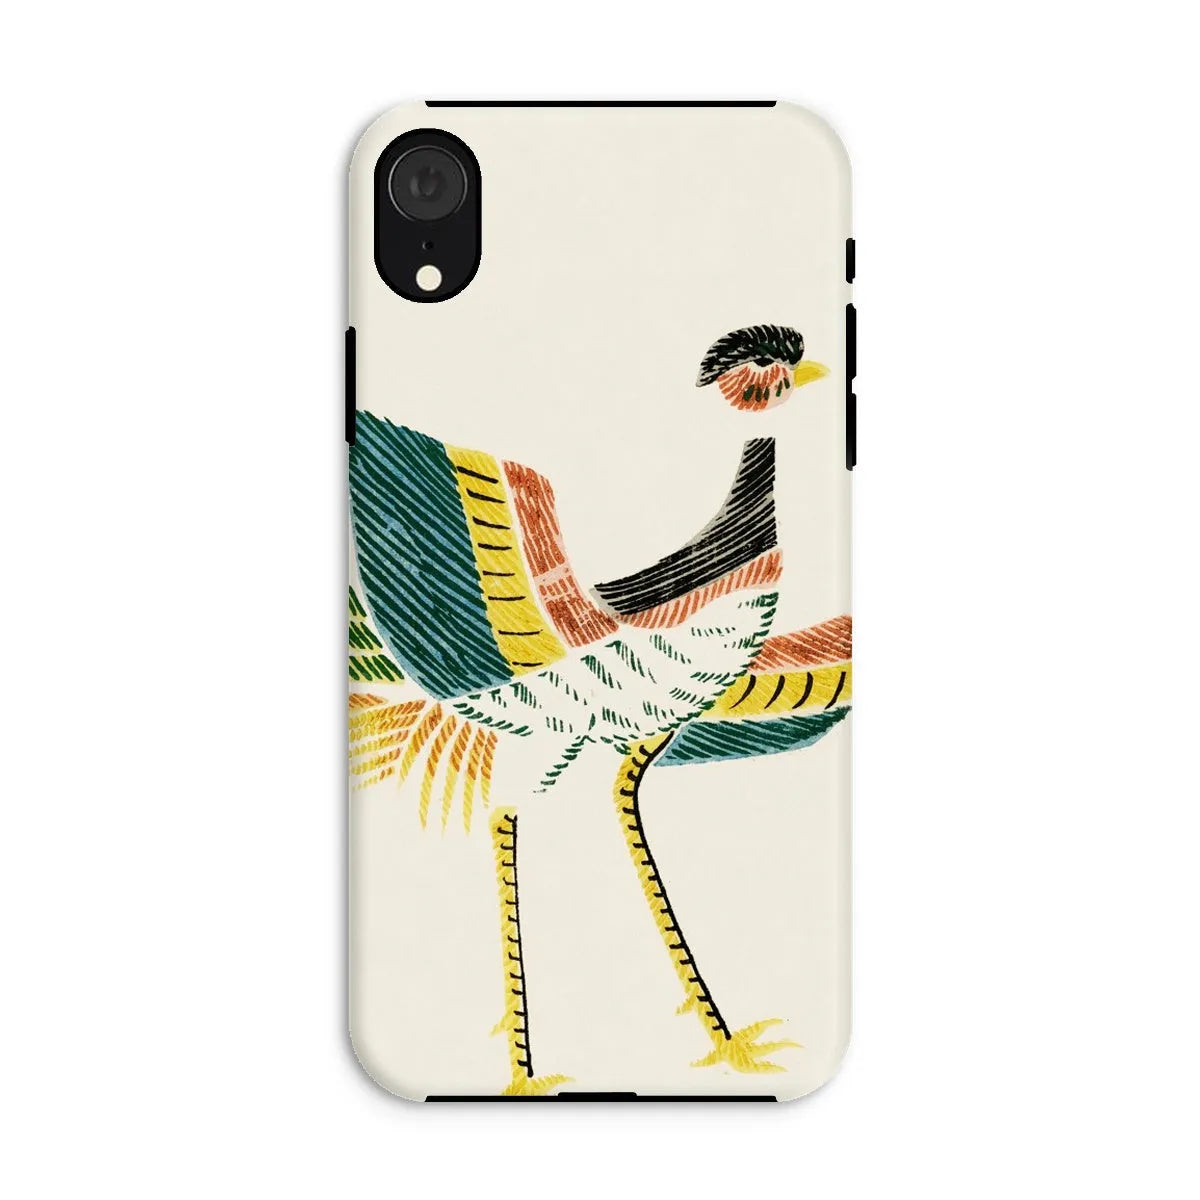 Woodblock Crane - Japanese Bird Phone Case - Taguchi Tomoki - Iphone Xr / Matte - Mobile Phone Cases - Aesthetic Art